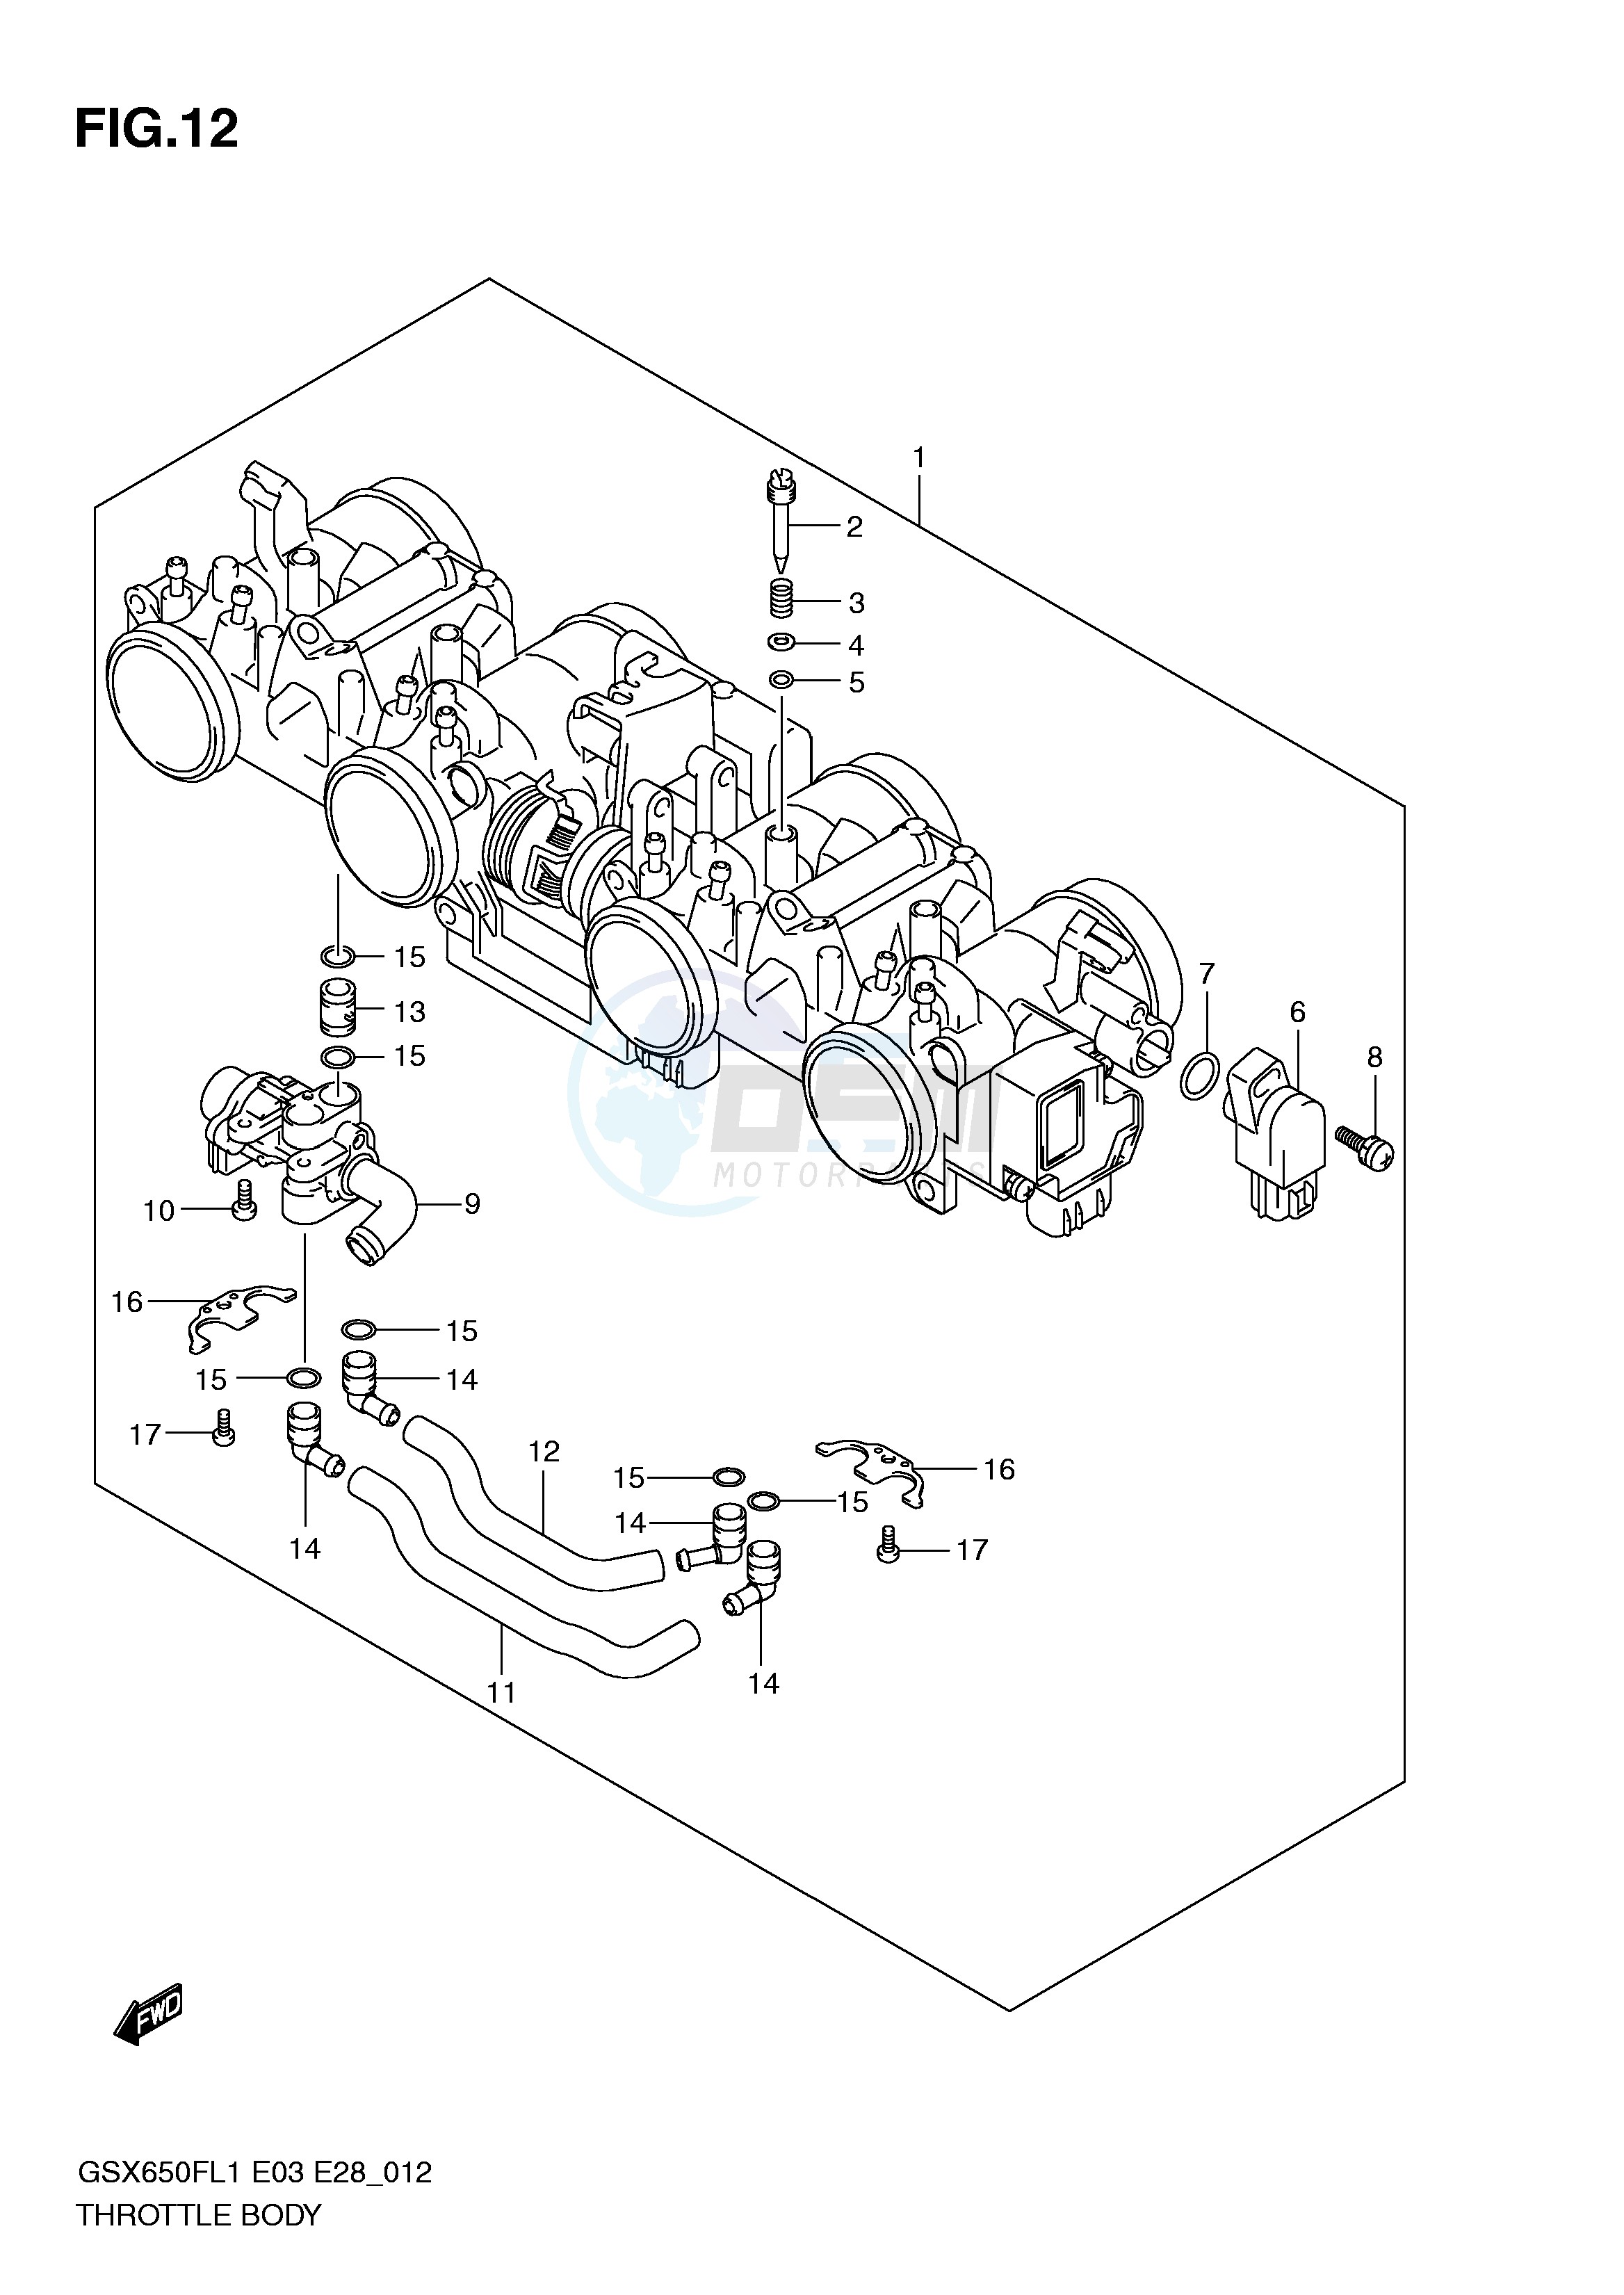 THROTTLE BODY (GSX650FL1 E3) blueprint